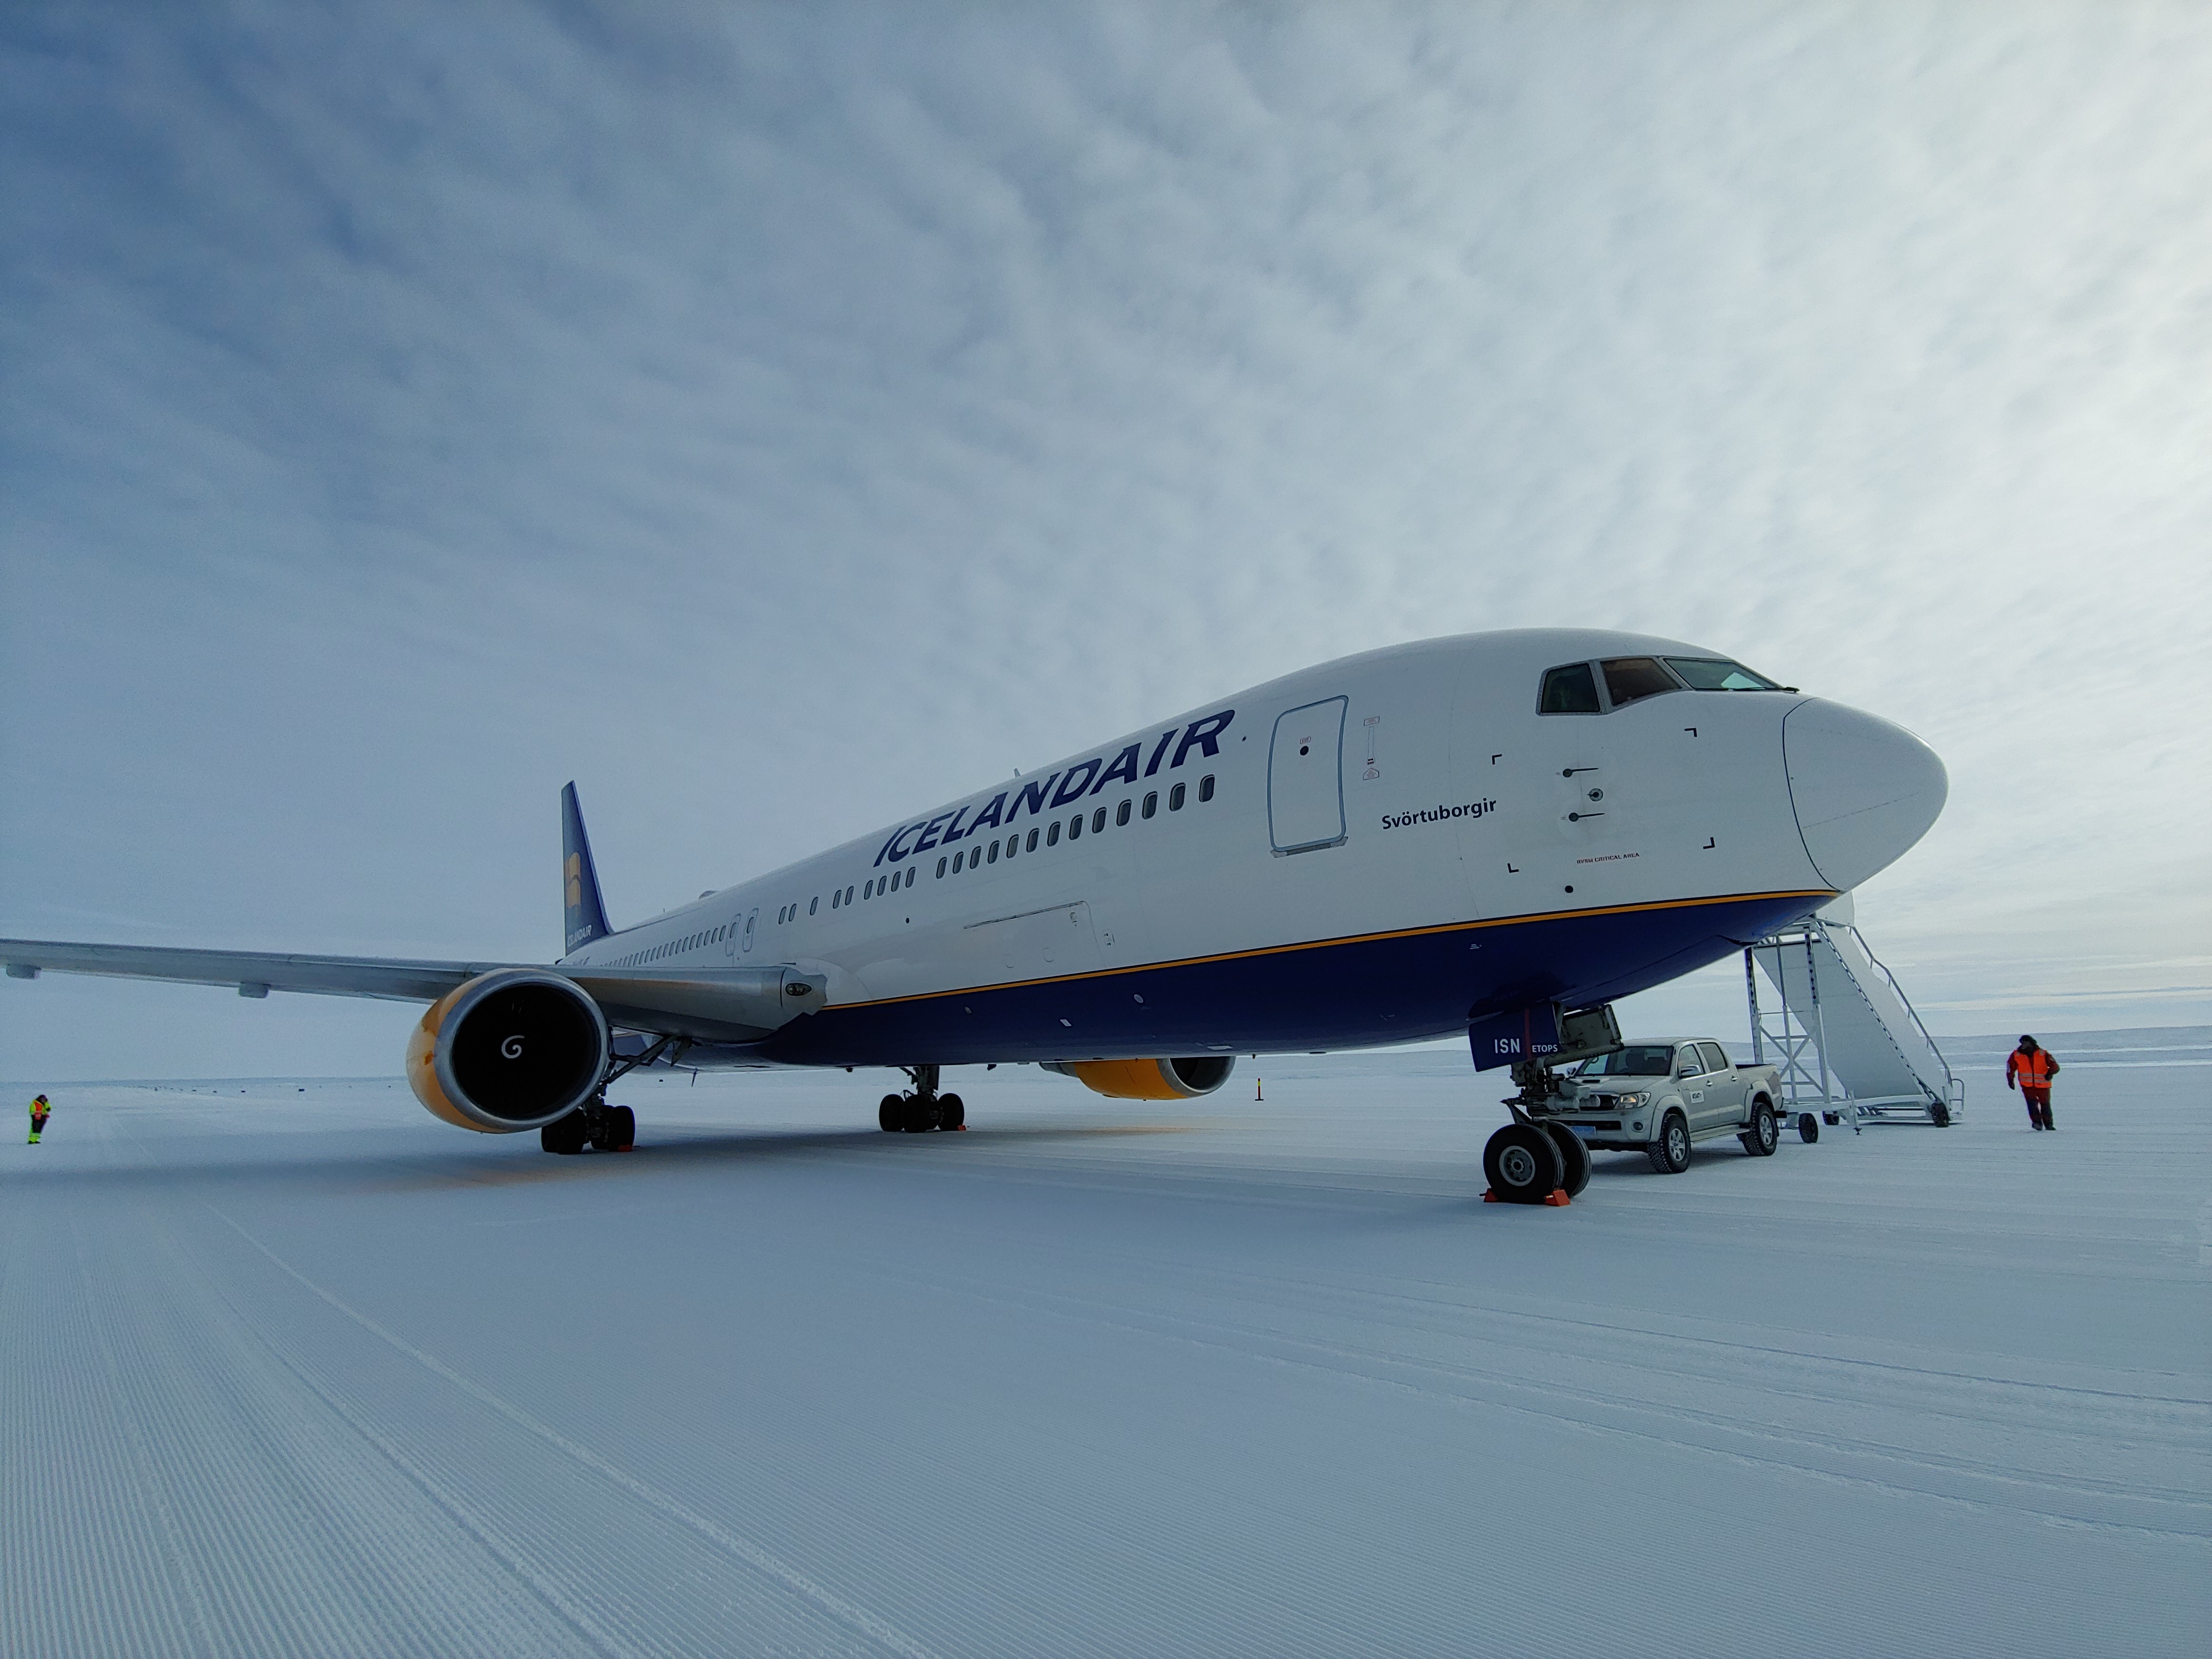 Icelandair Antarctica